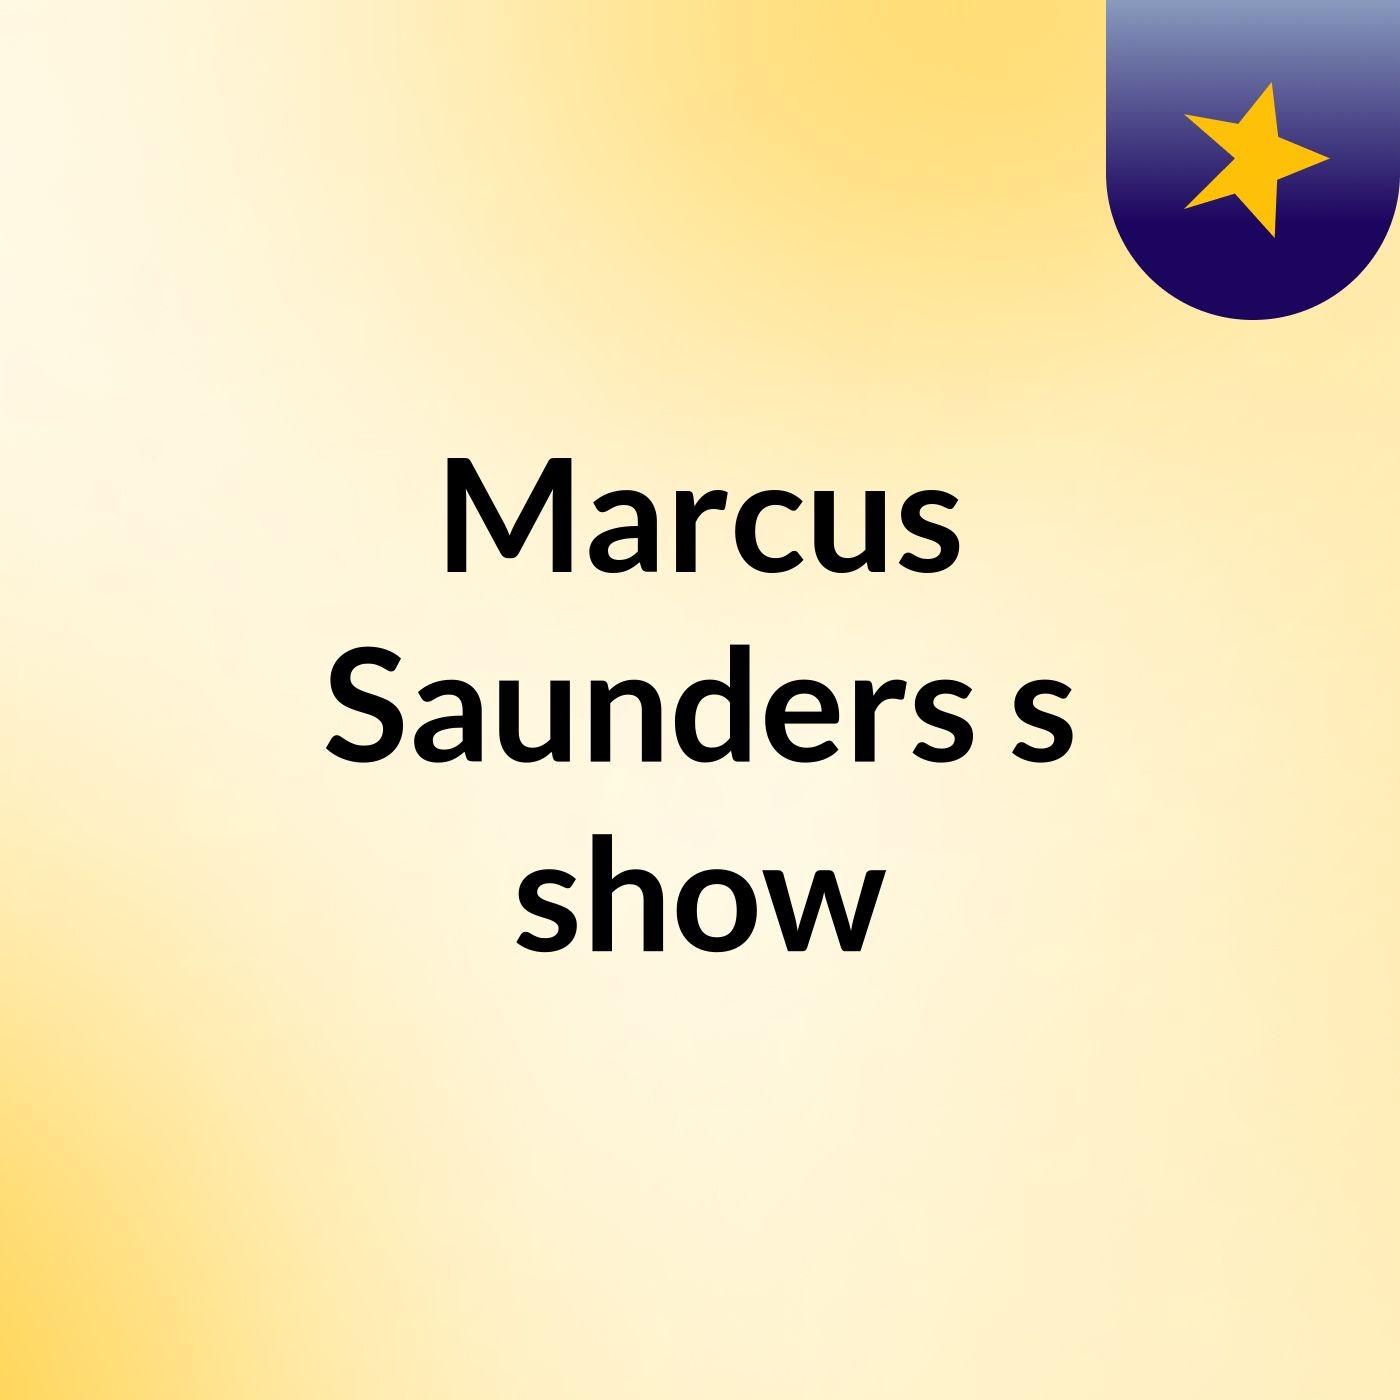 Marcus Saunders's show